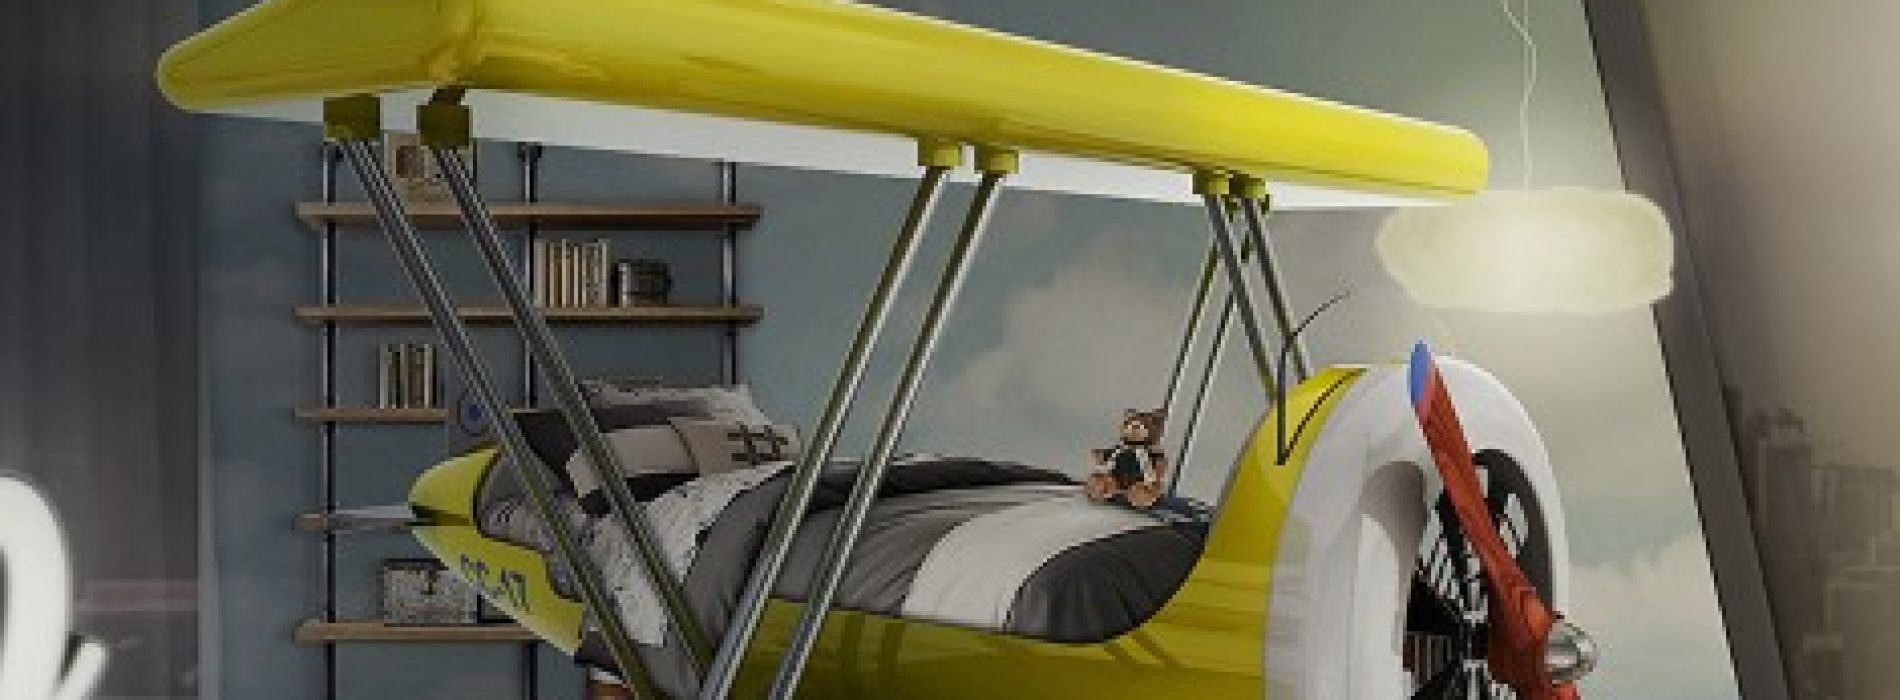 「Disney飛機」兒童床‧型到飛入屋